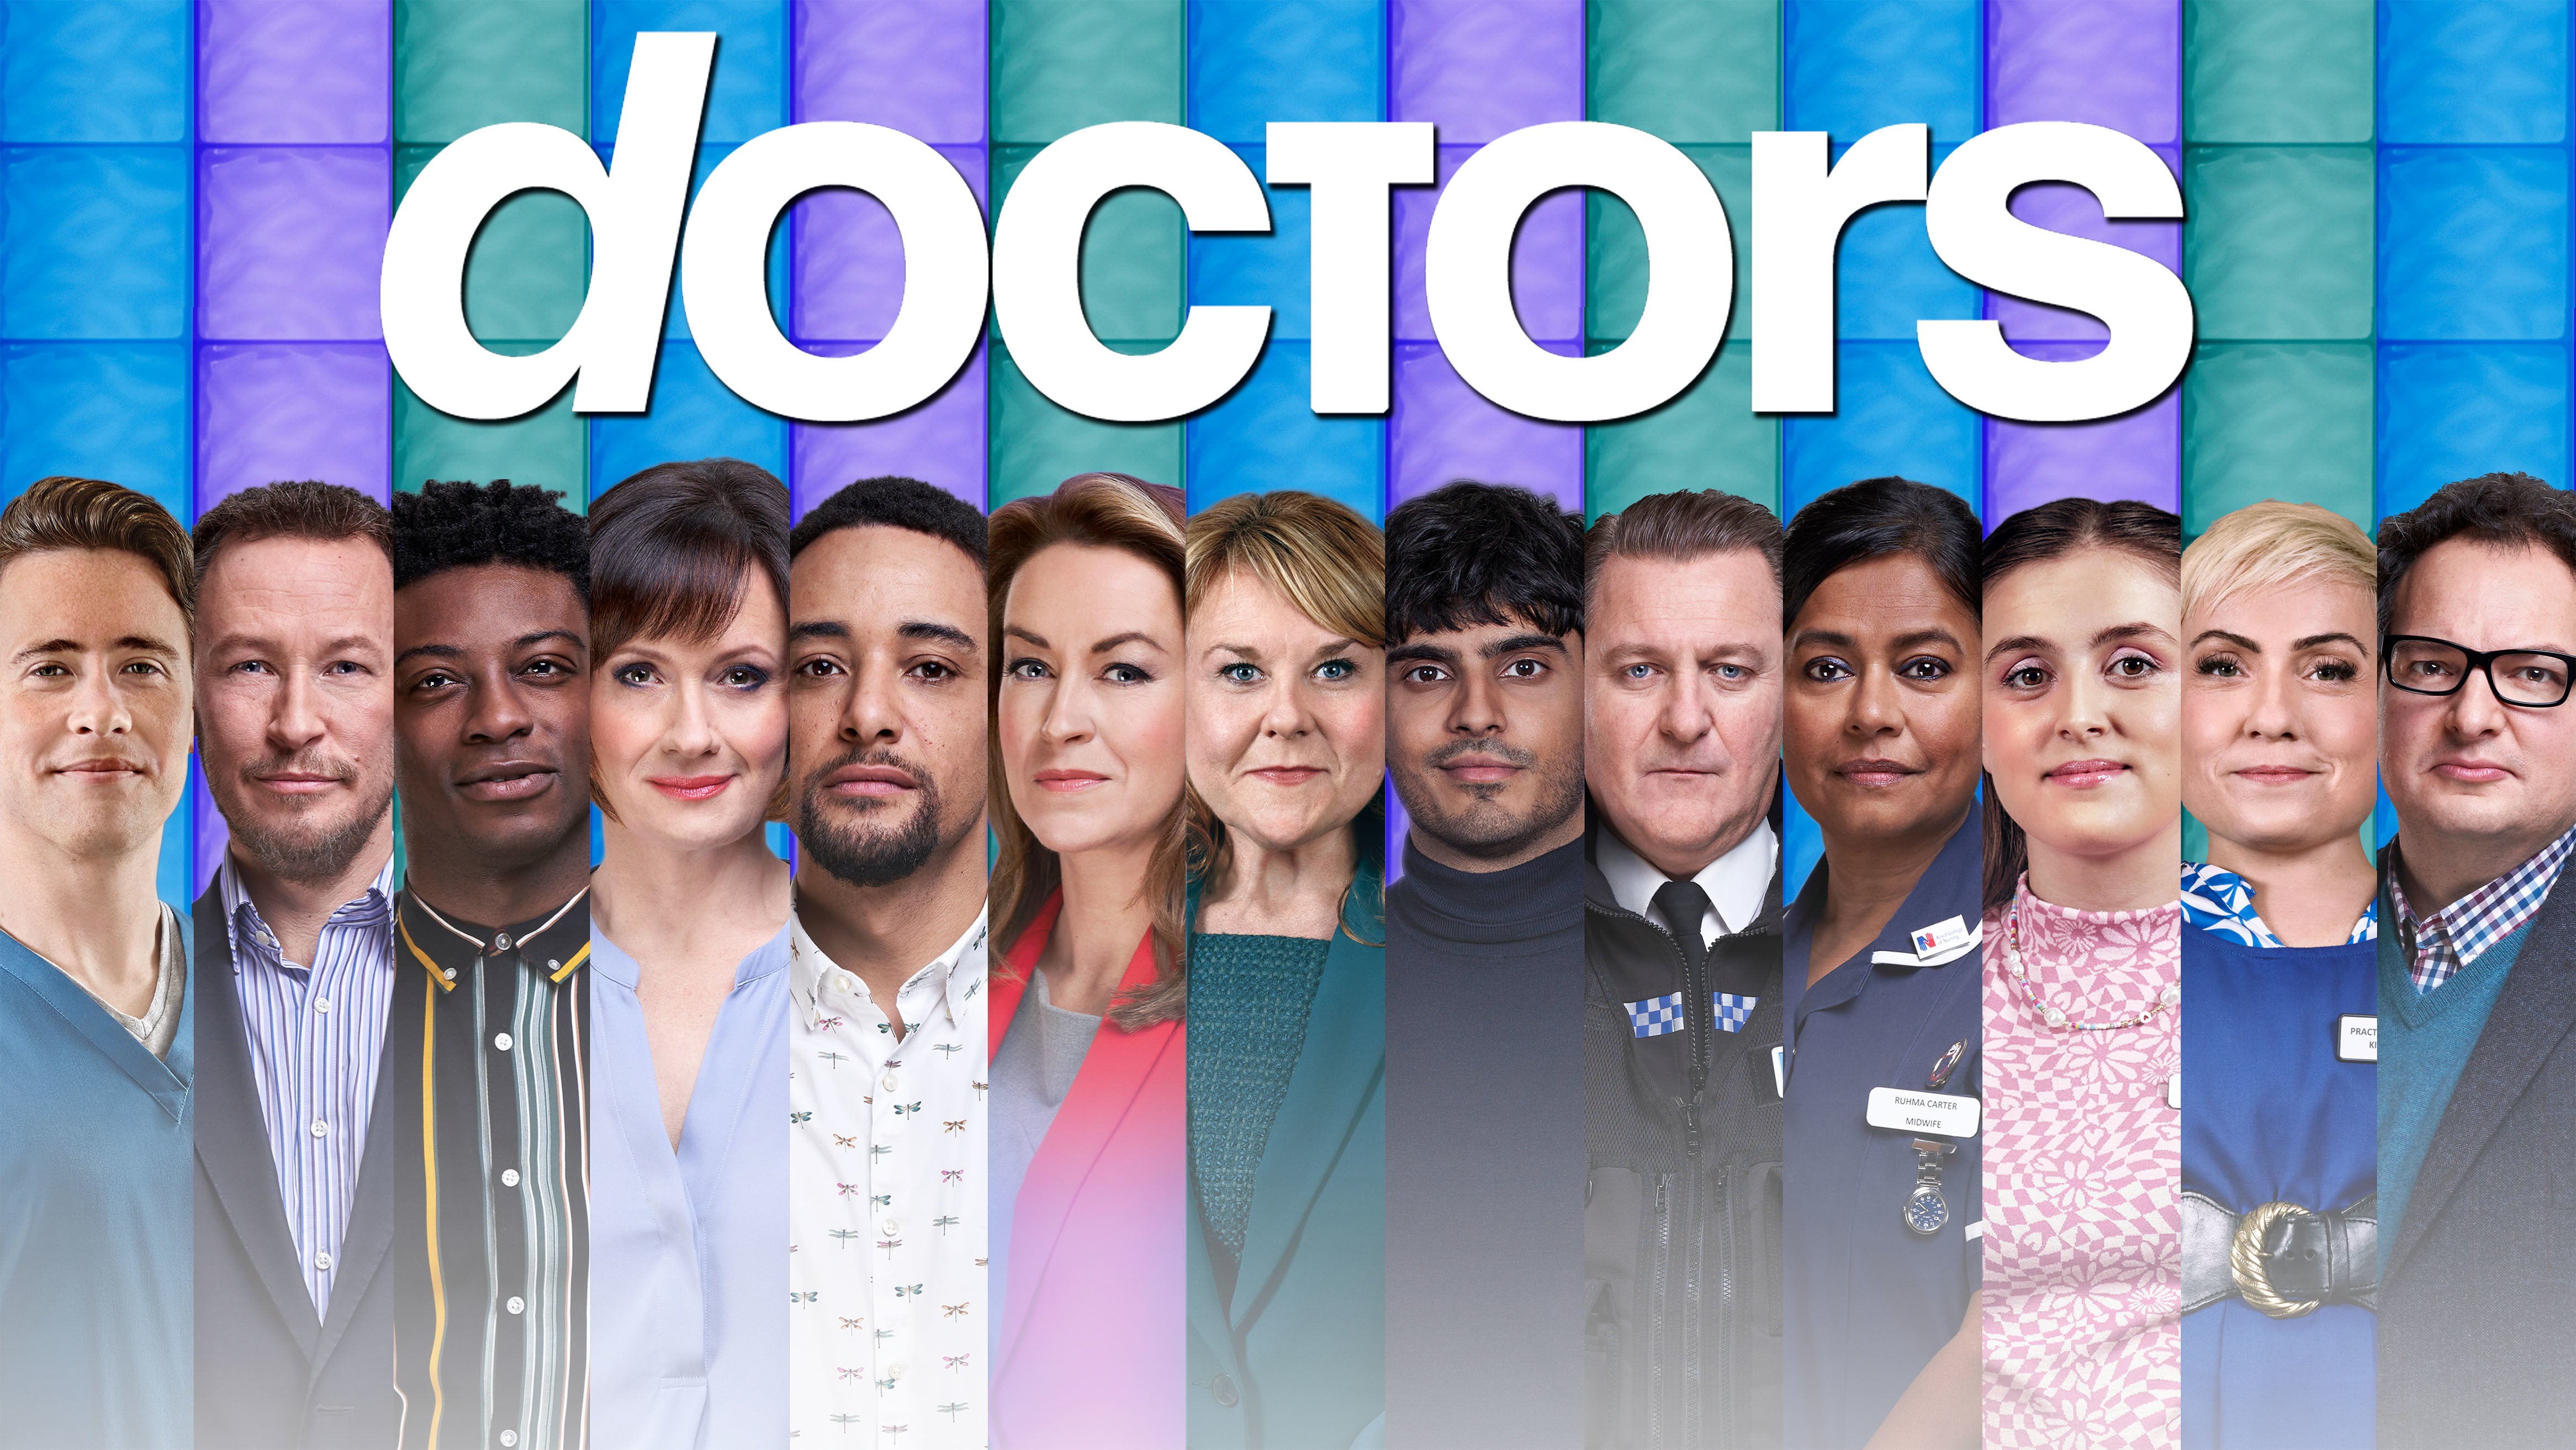 The ‘Doctors’ season 24 cast